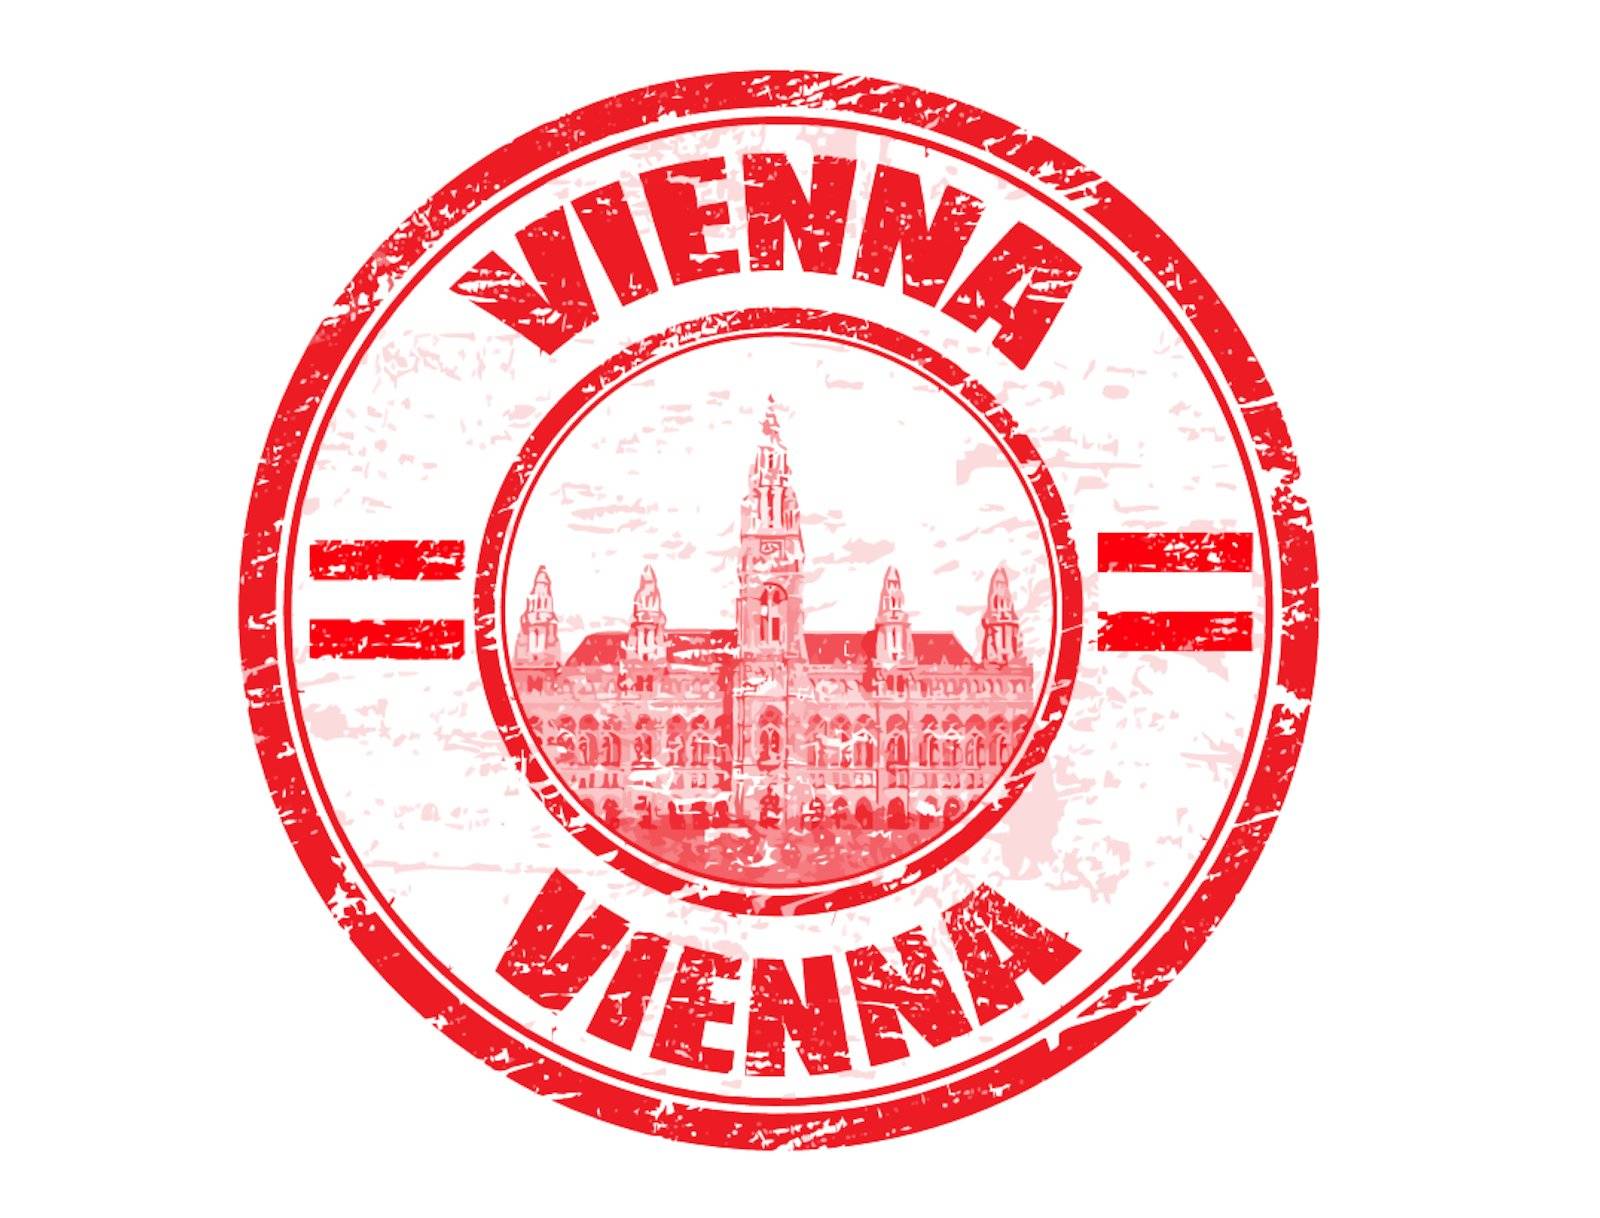 Vienna stamp by roxanabalint